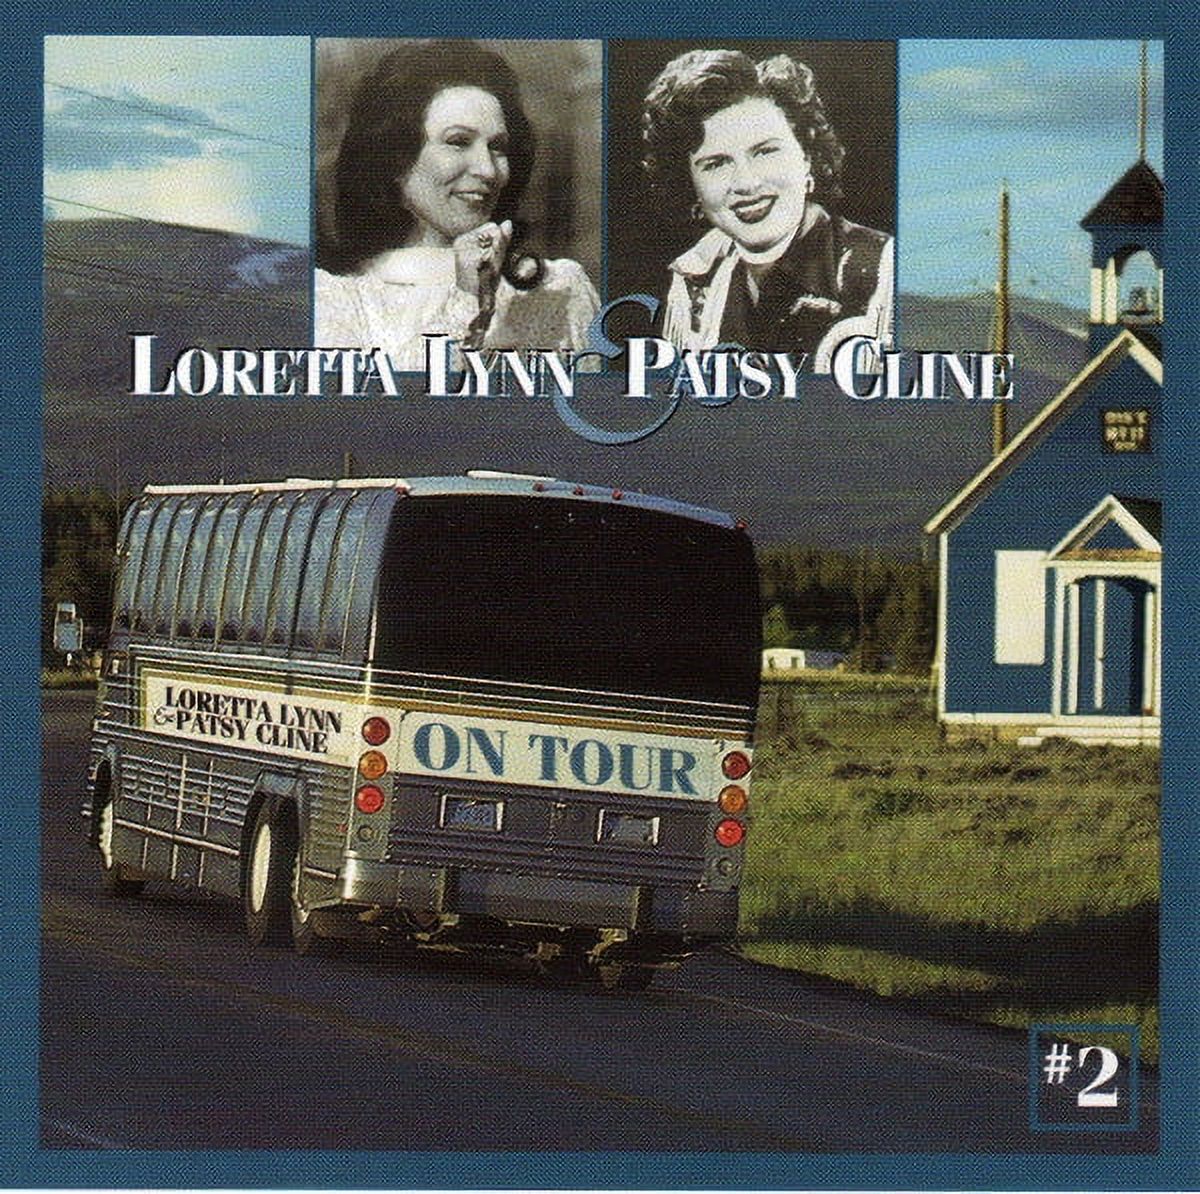 Patsy Cline, Loretta Lynn - On Tour #2 (CD) - image 1 of 3